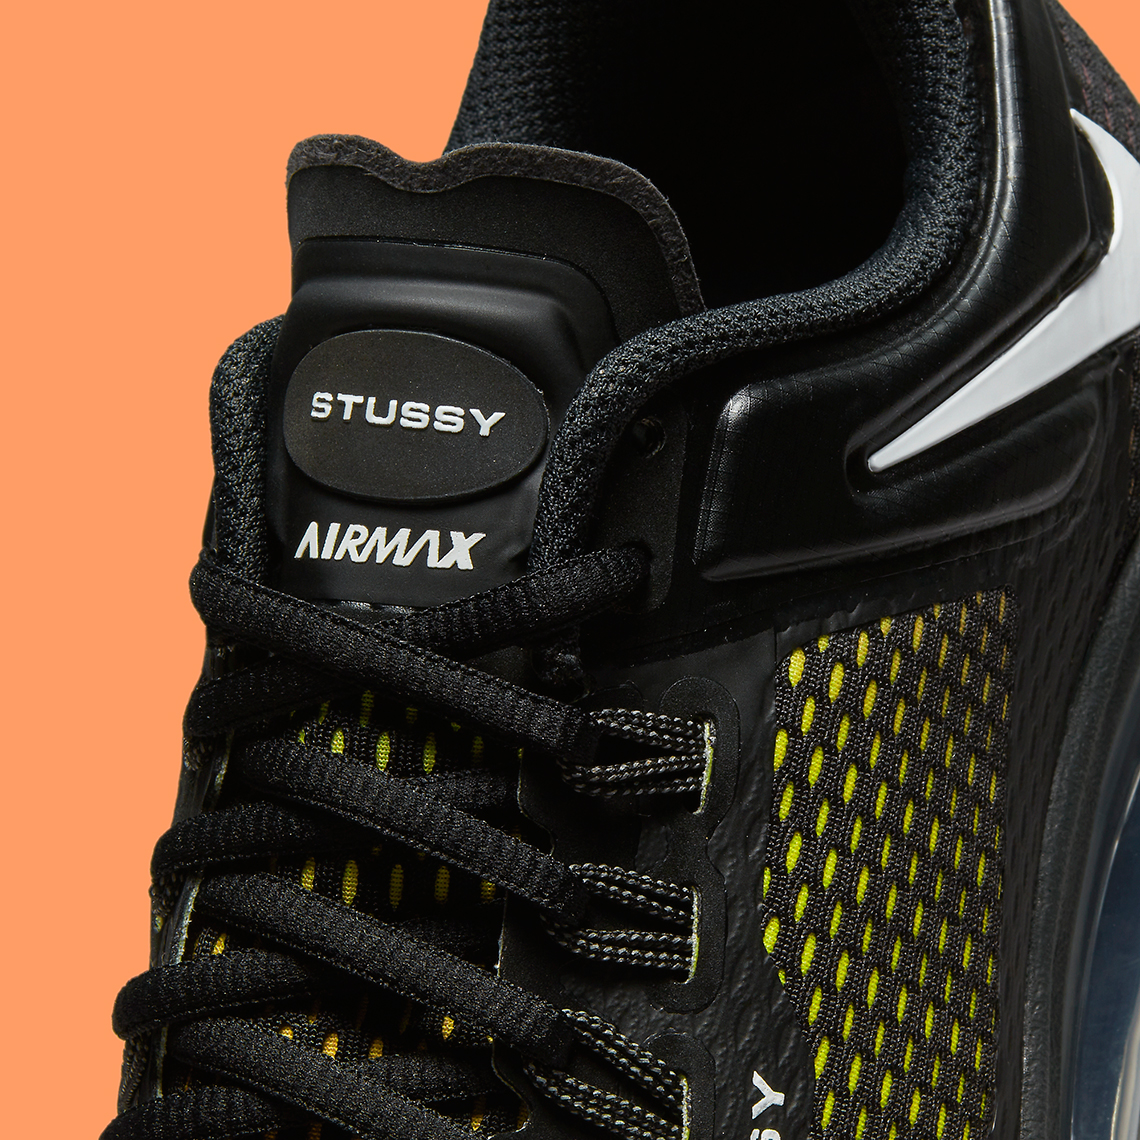 Stussy Nike Air Max 2013 Black Do2461 001 7